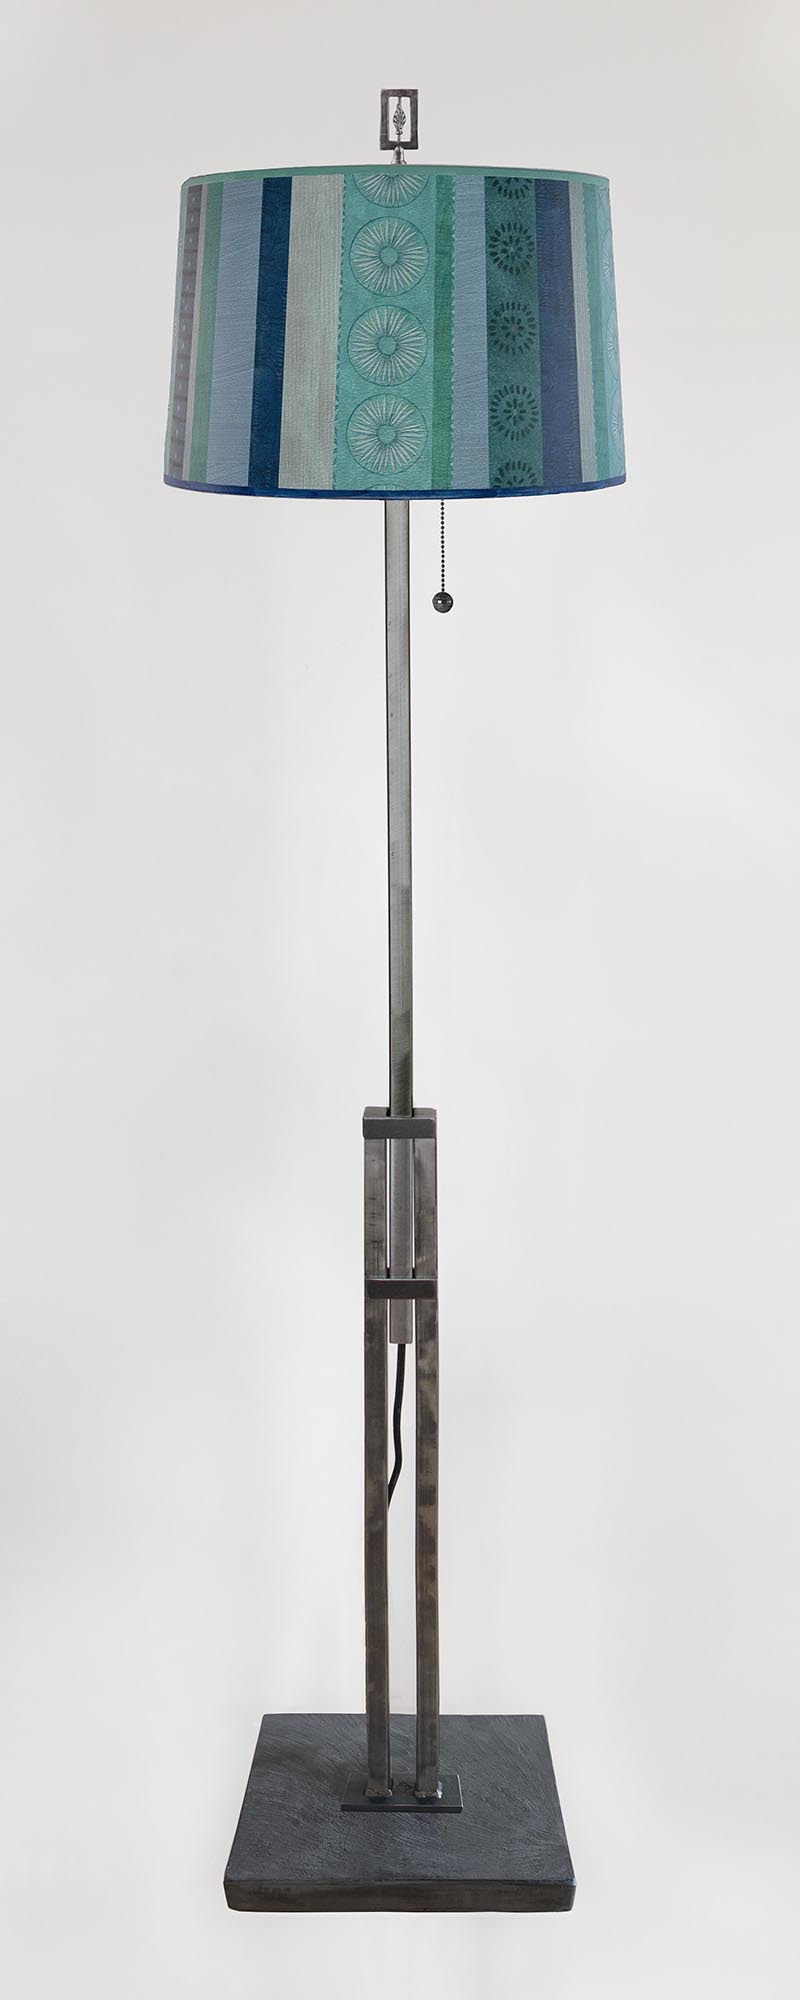 Janna Ugone & Co Floor Lamps Adjustable-Height Steel Floor Lamp with Large Drum Shade in Serape Waters